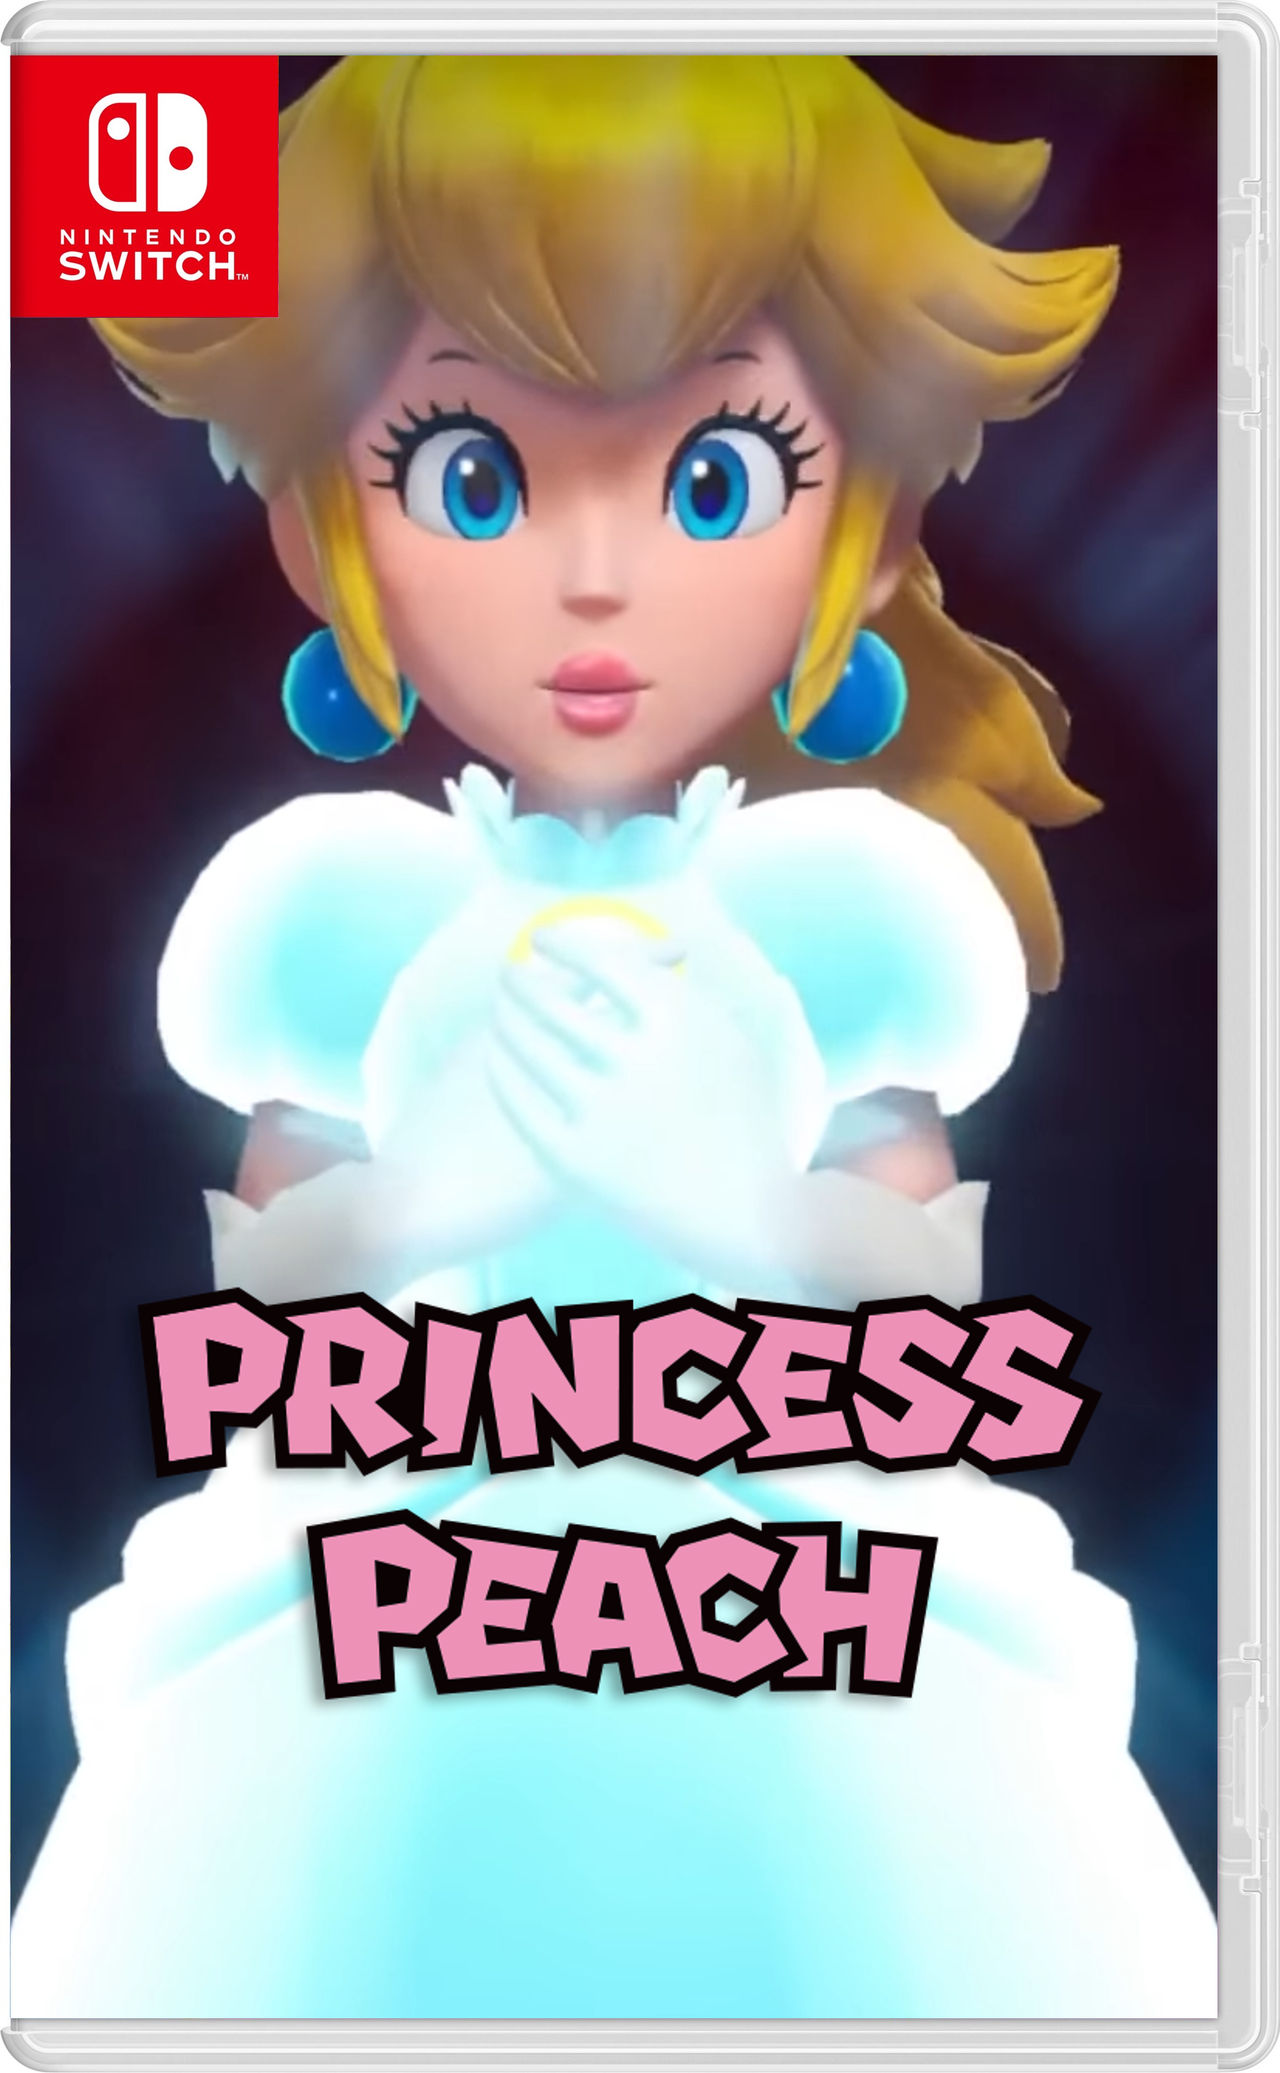 Princess Peach for Nintendo Switch boxart by Garpikacars12 on